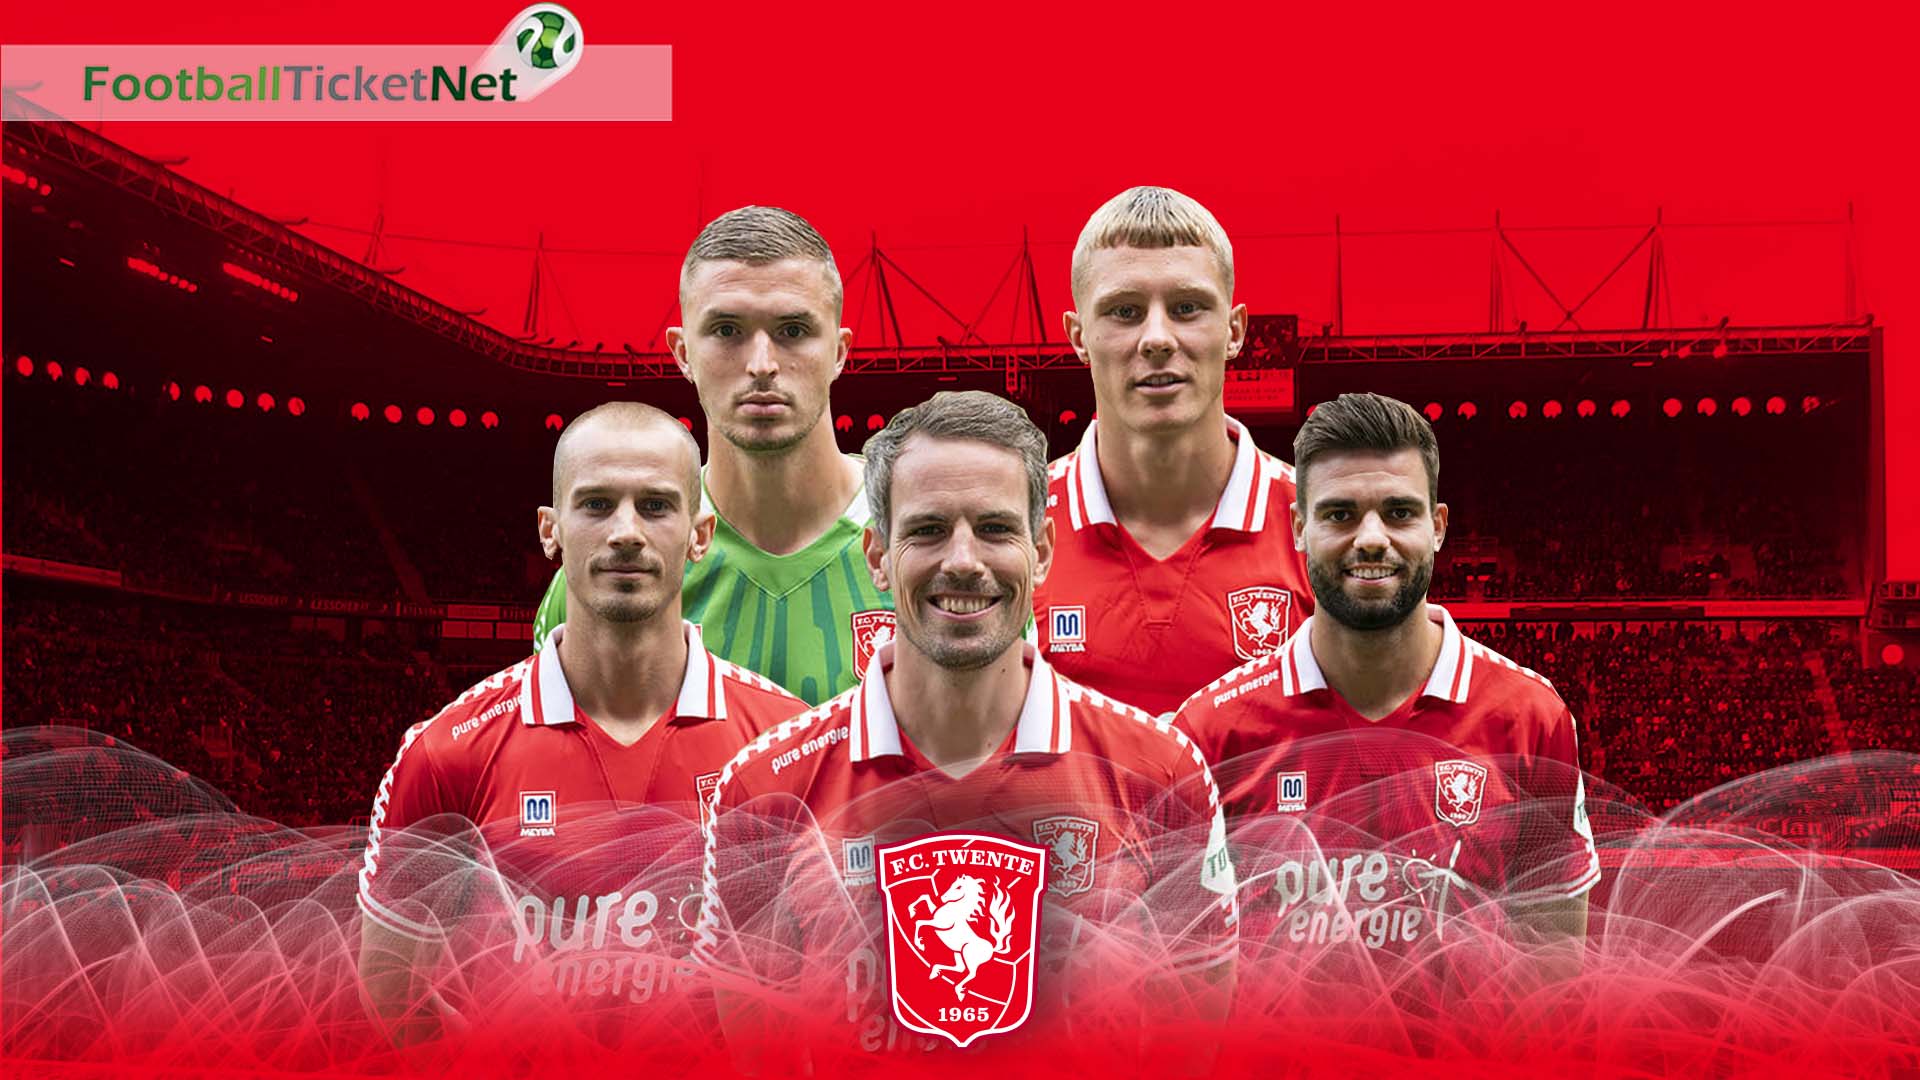 Buy FC Twente Football Tickets 2019/20 | Football Ticket Net